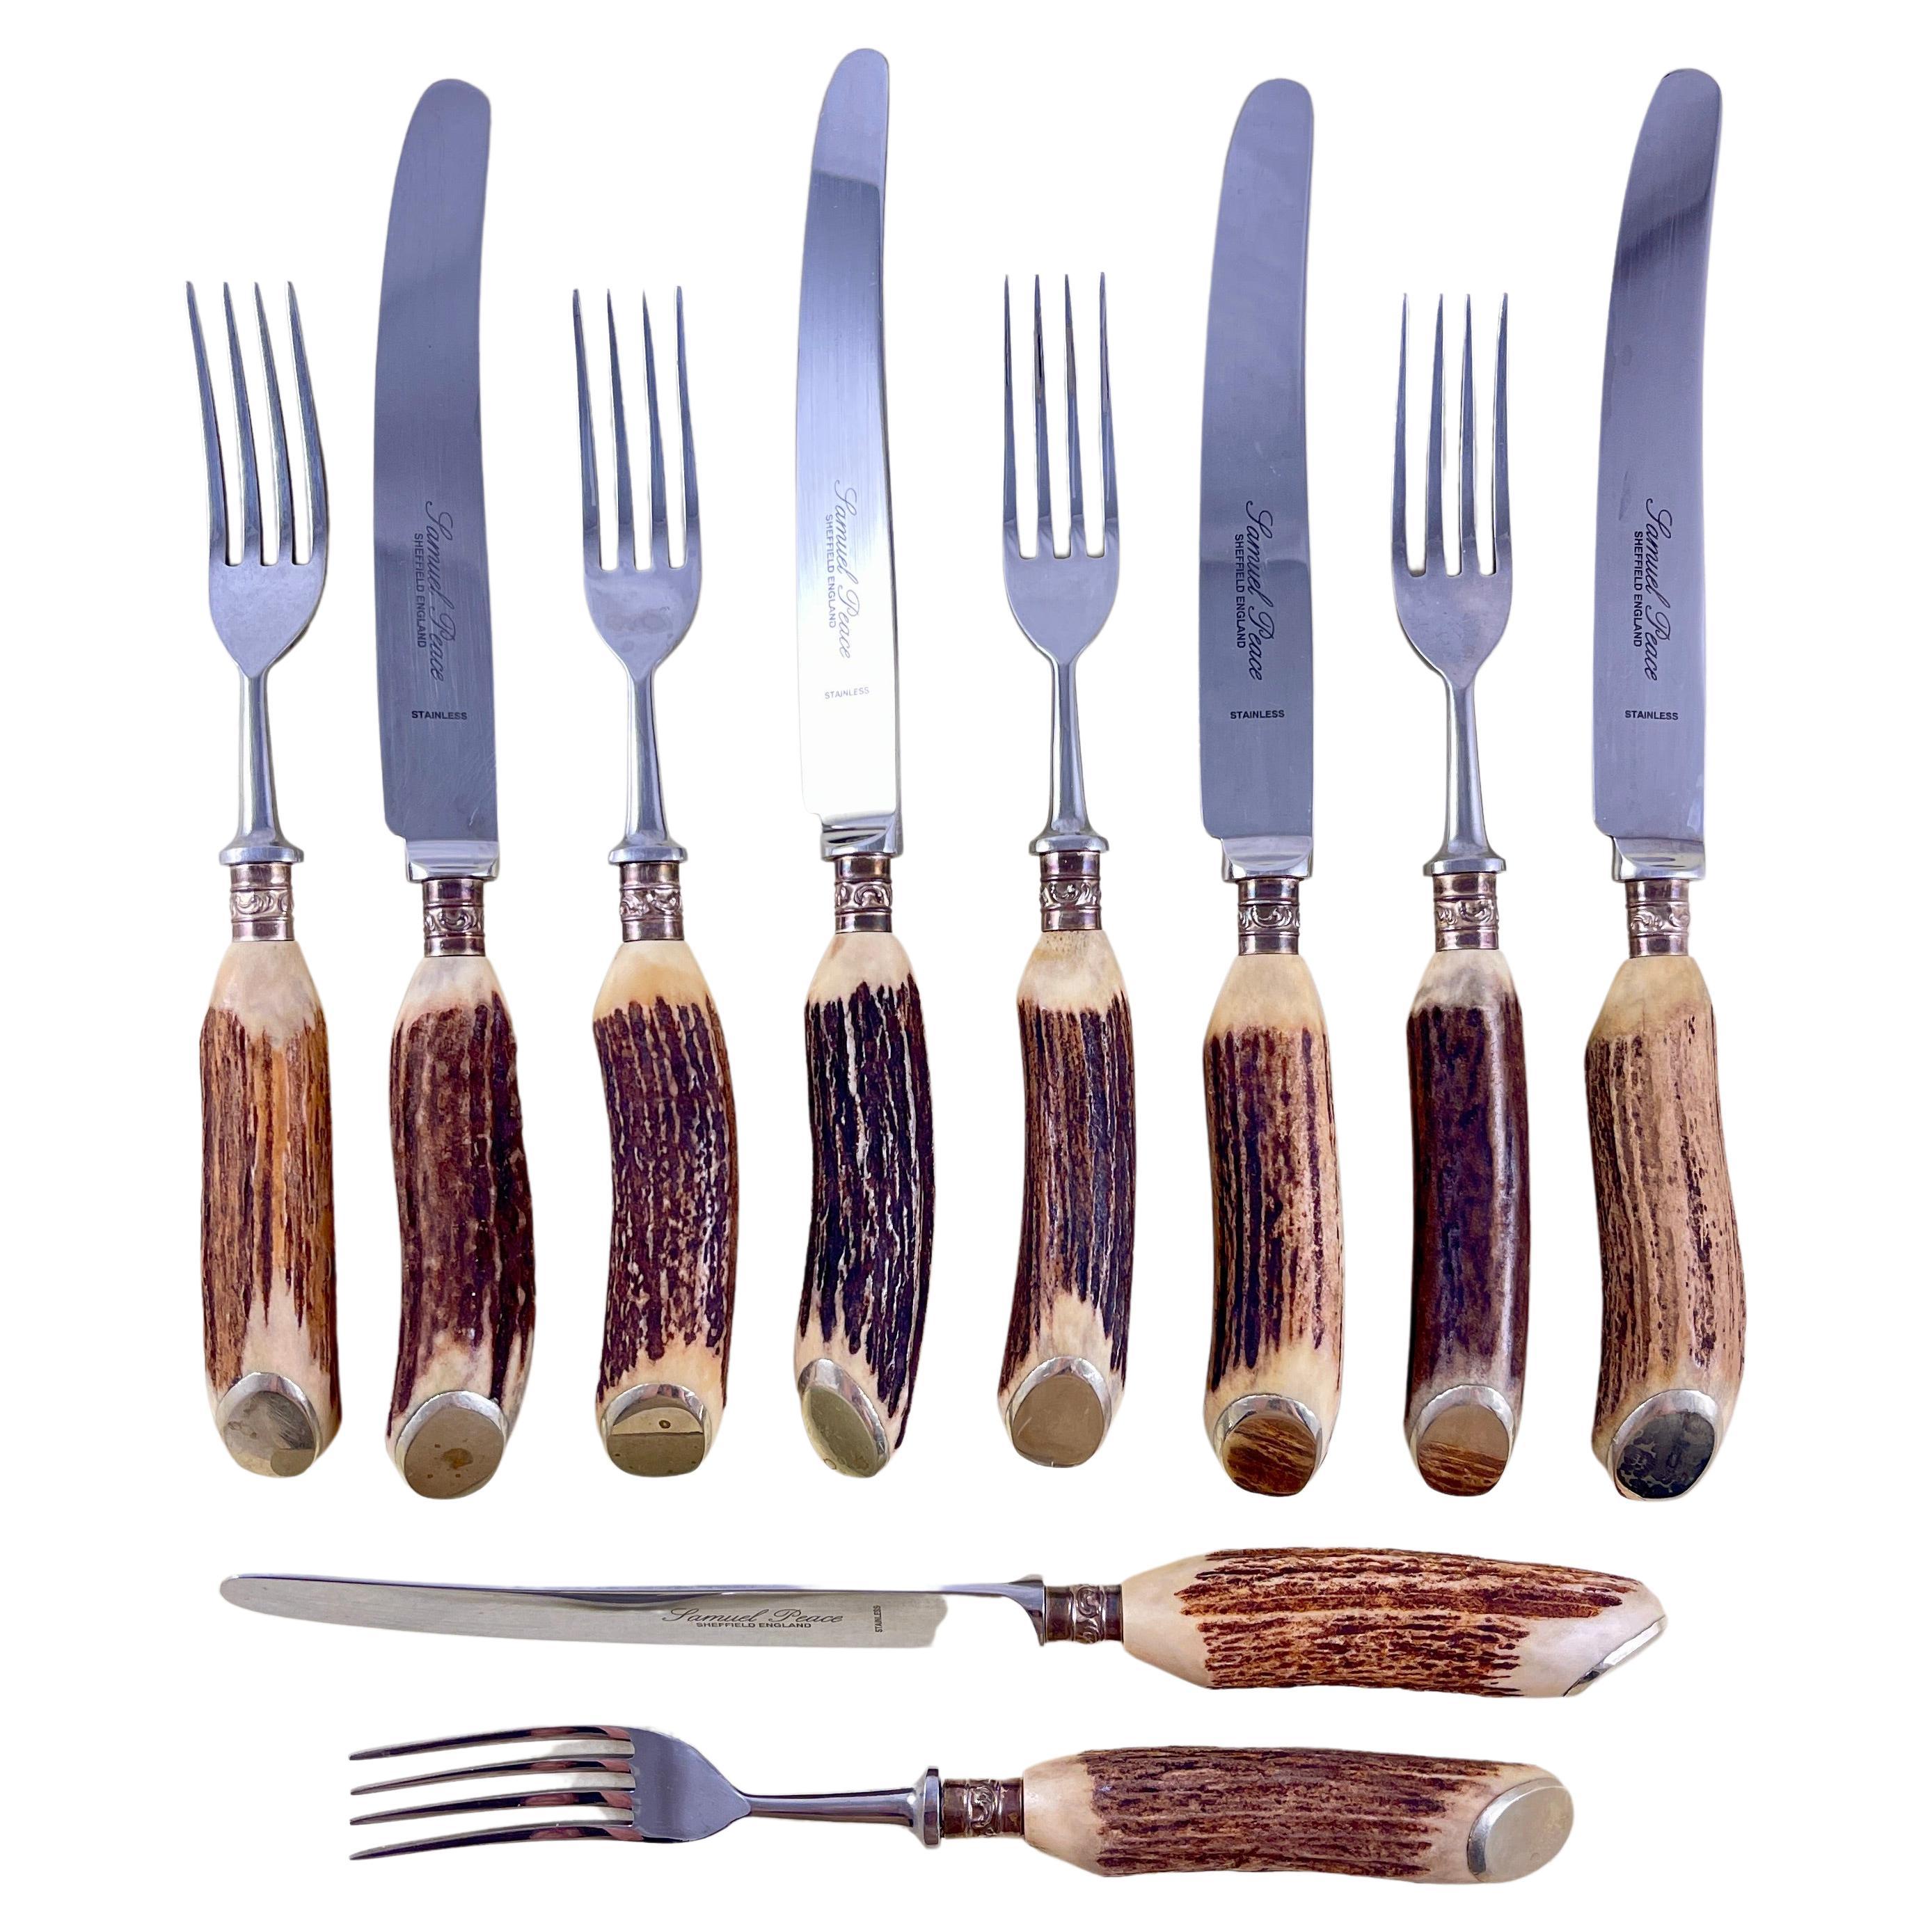 Samuel Peace English Stag Antler Handled Knives & Forks, 10 piece set